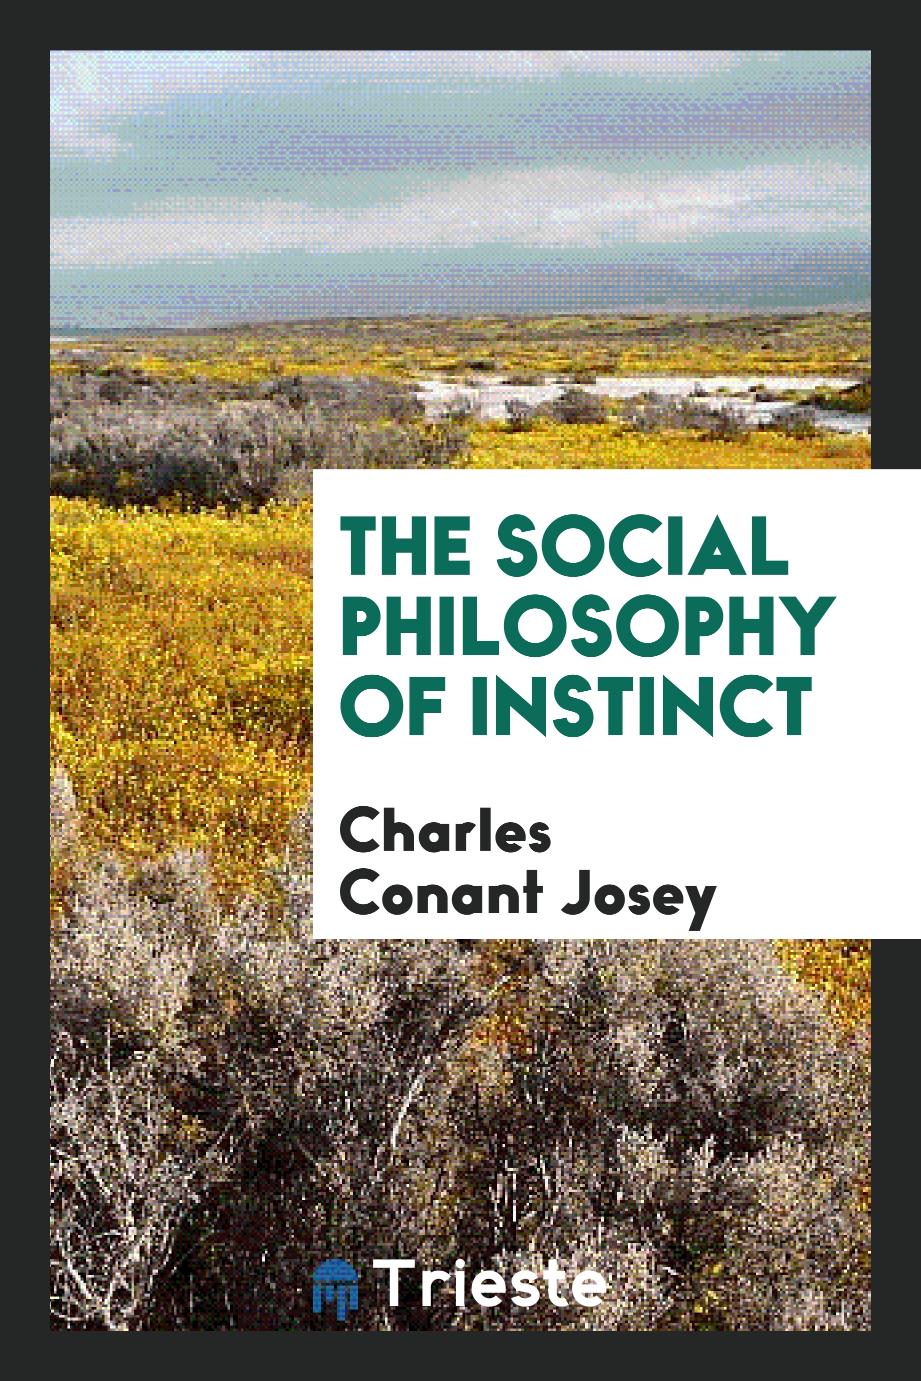 The social philosophy of instinct